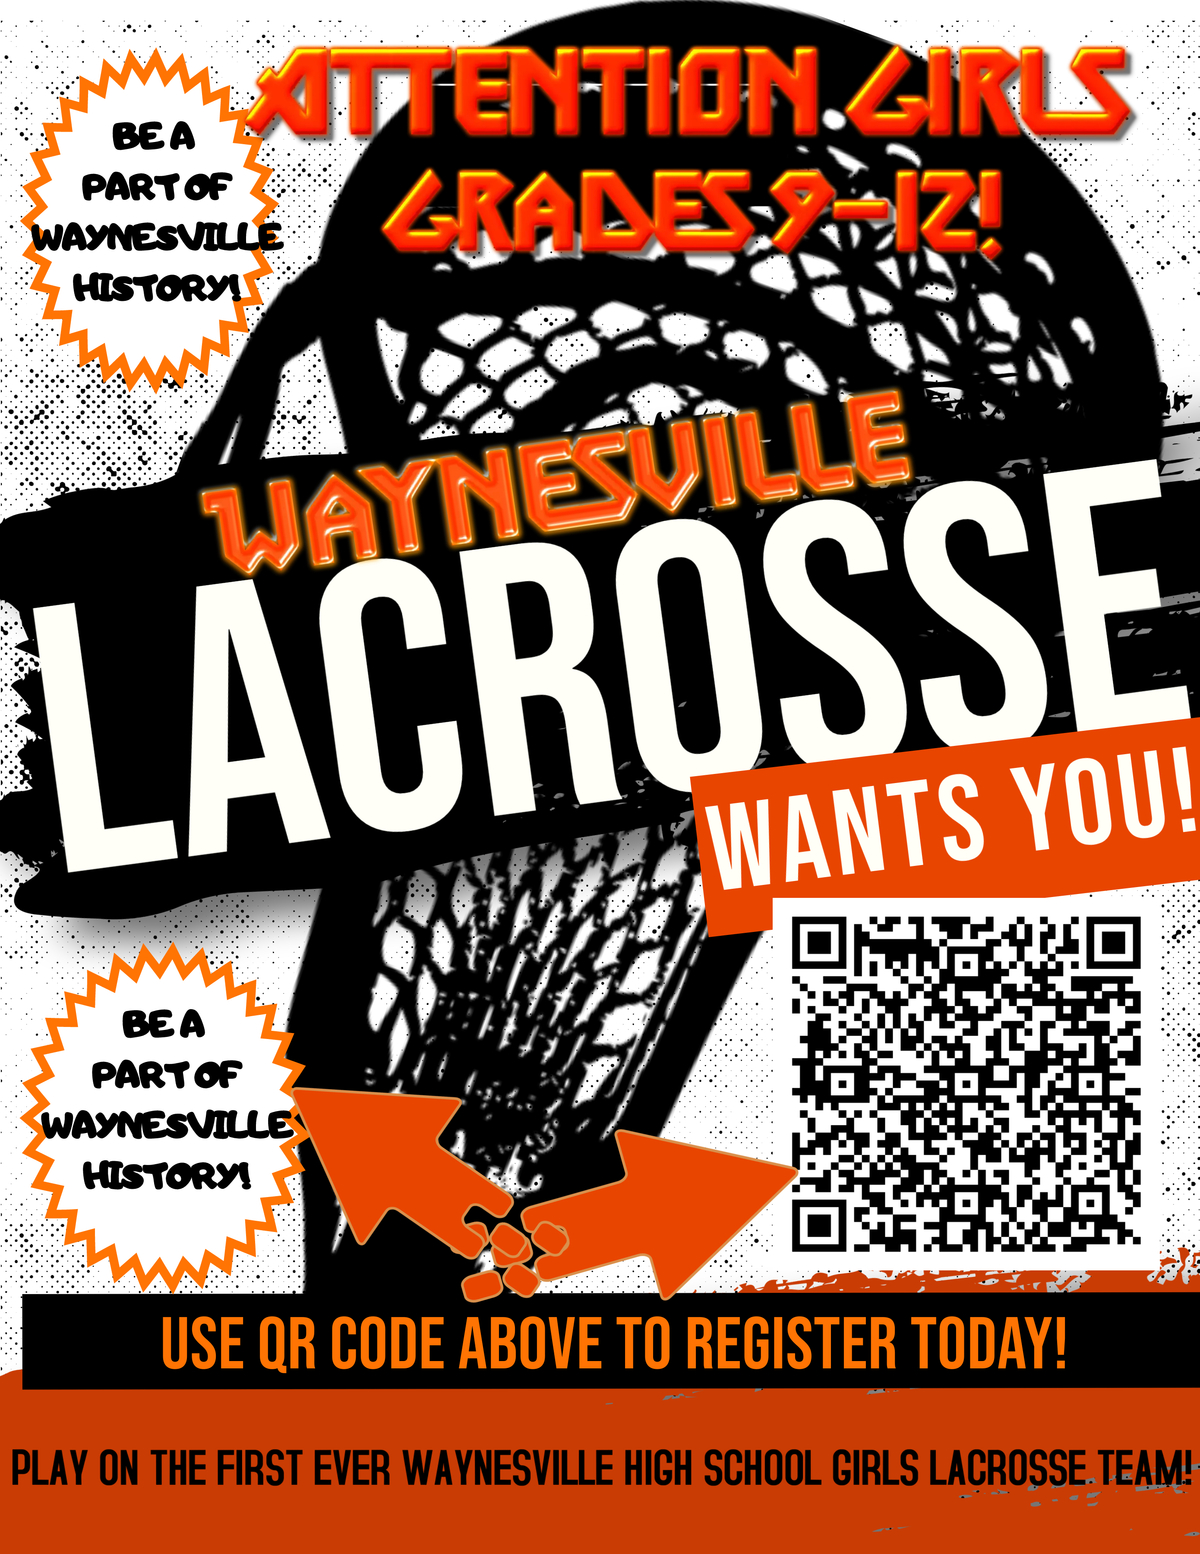 lacrosse registration